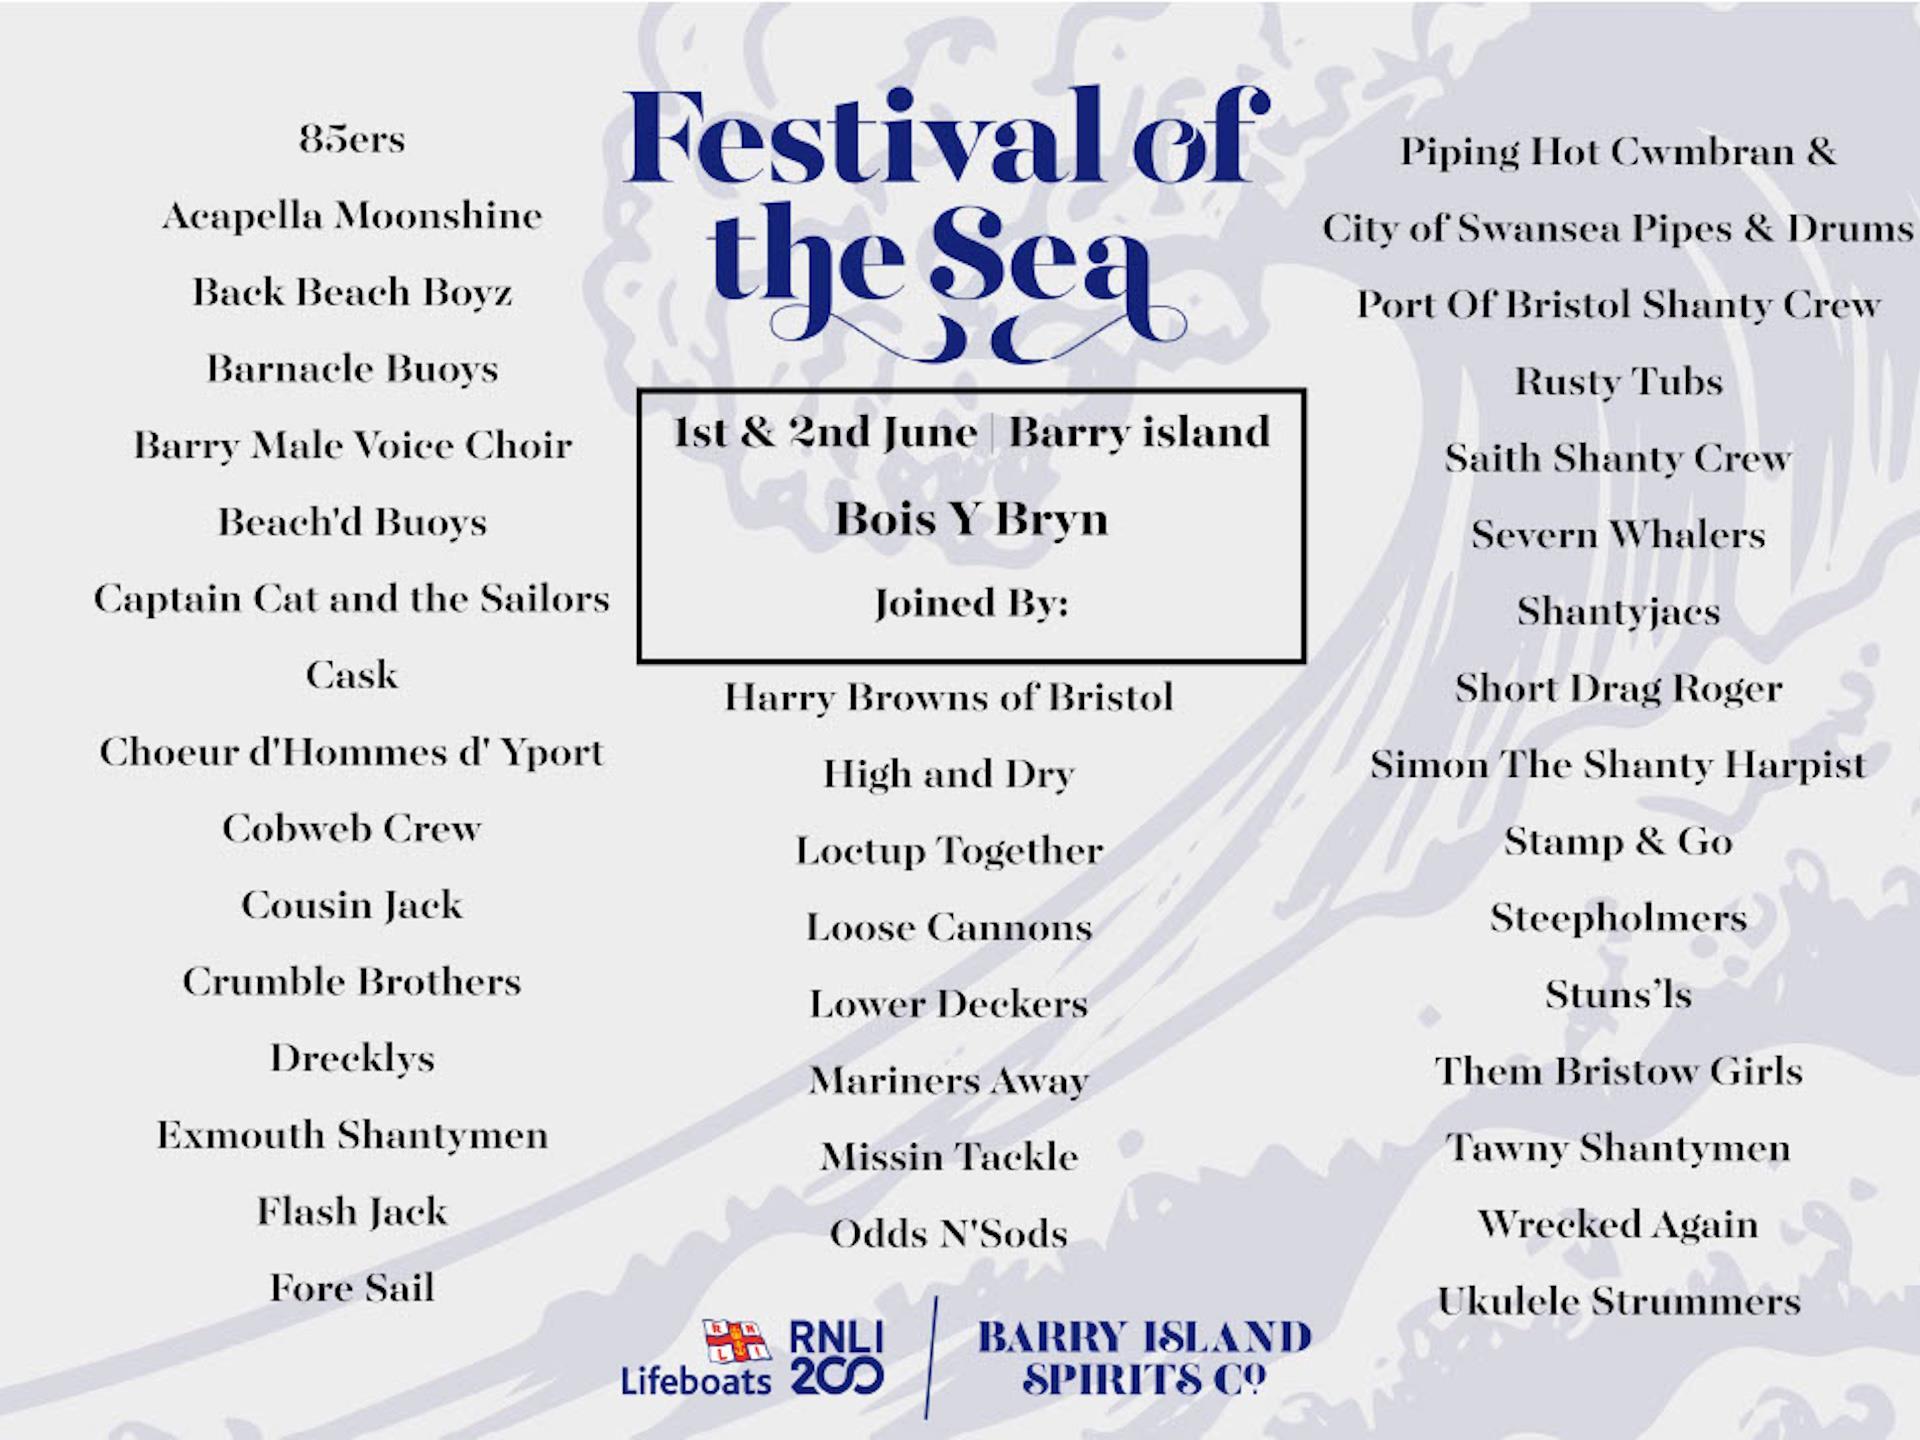 Festival of the Sea